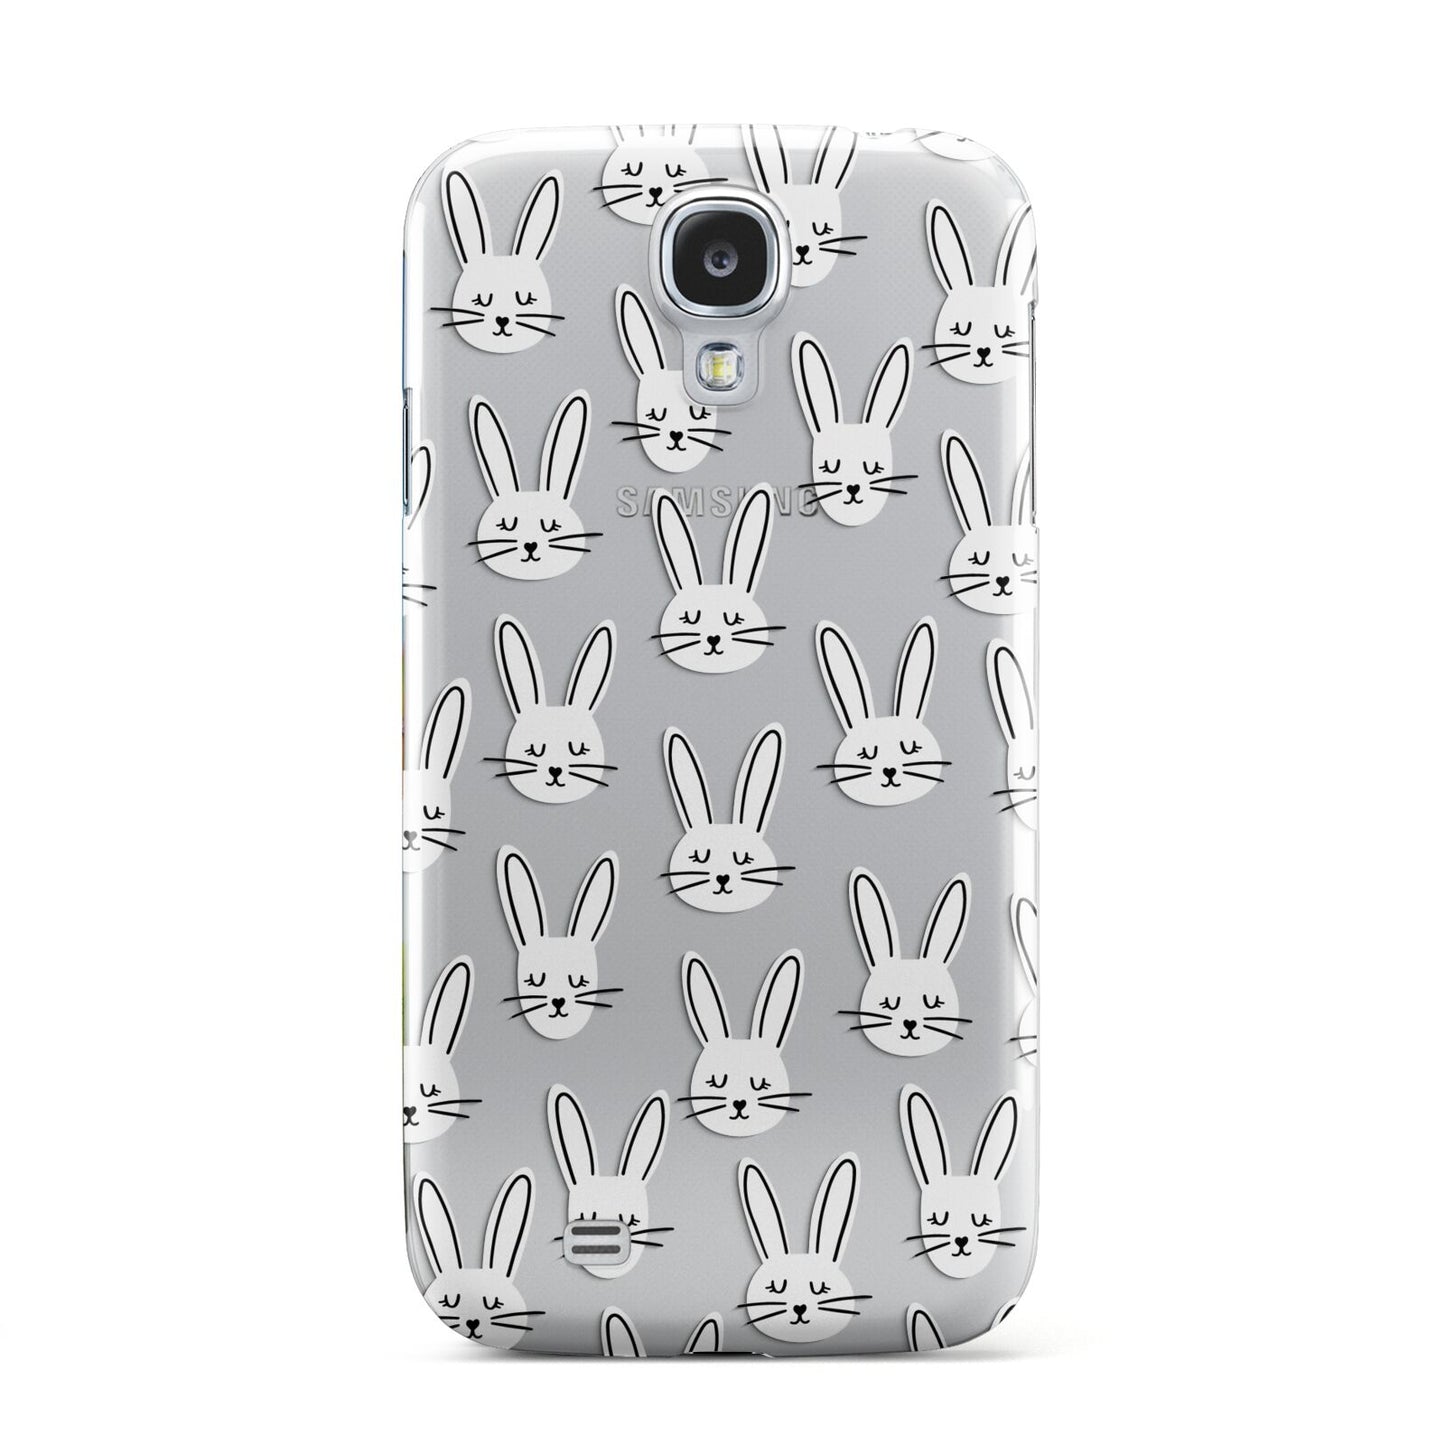 Easter Bunny Samsung Galaxy S4 Case